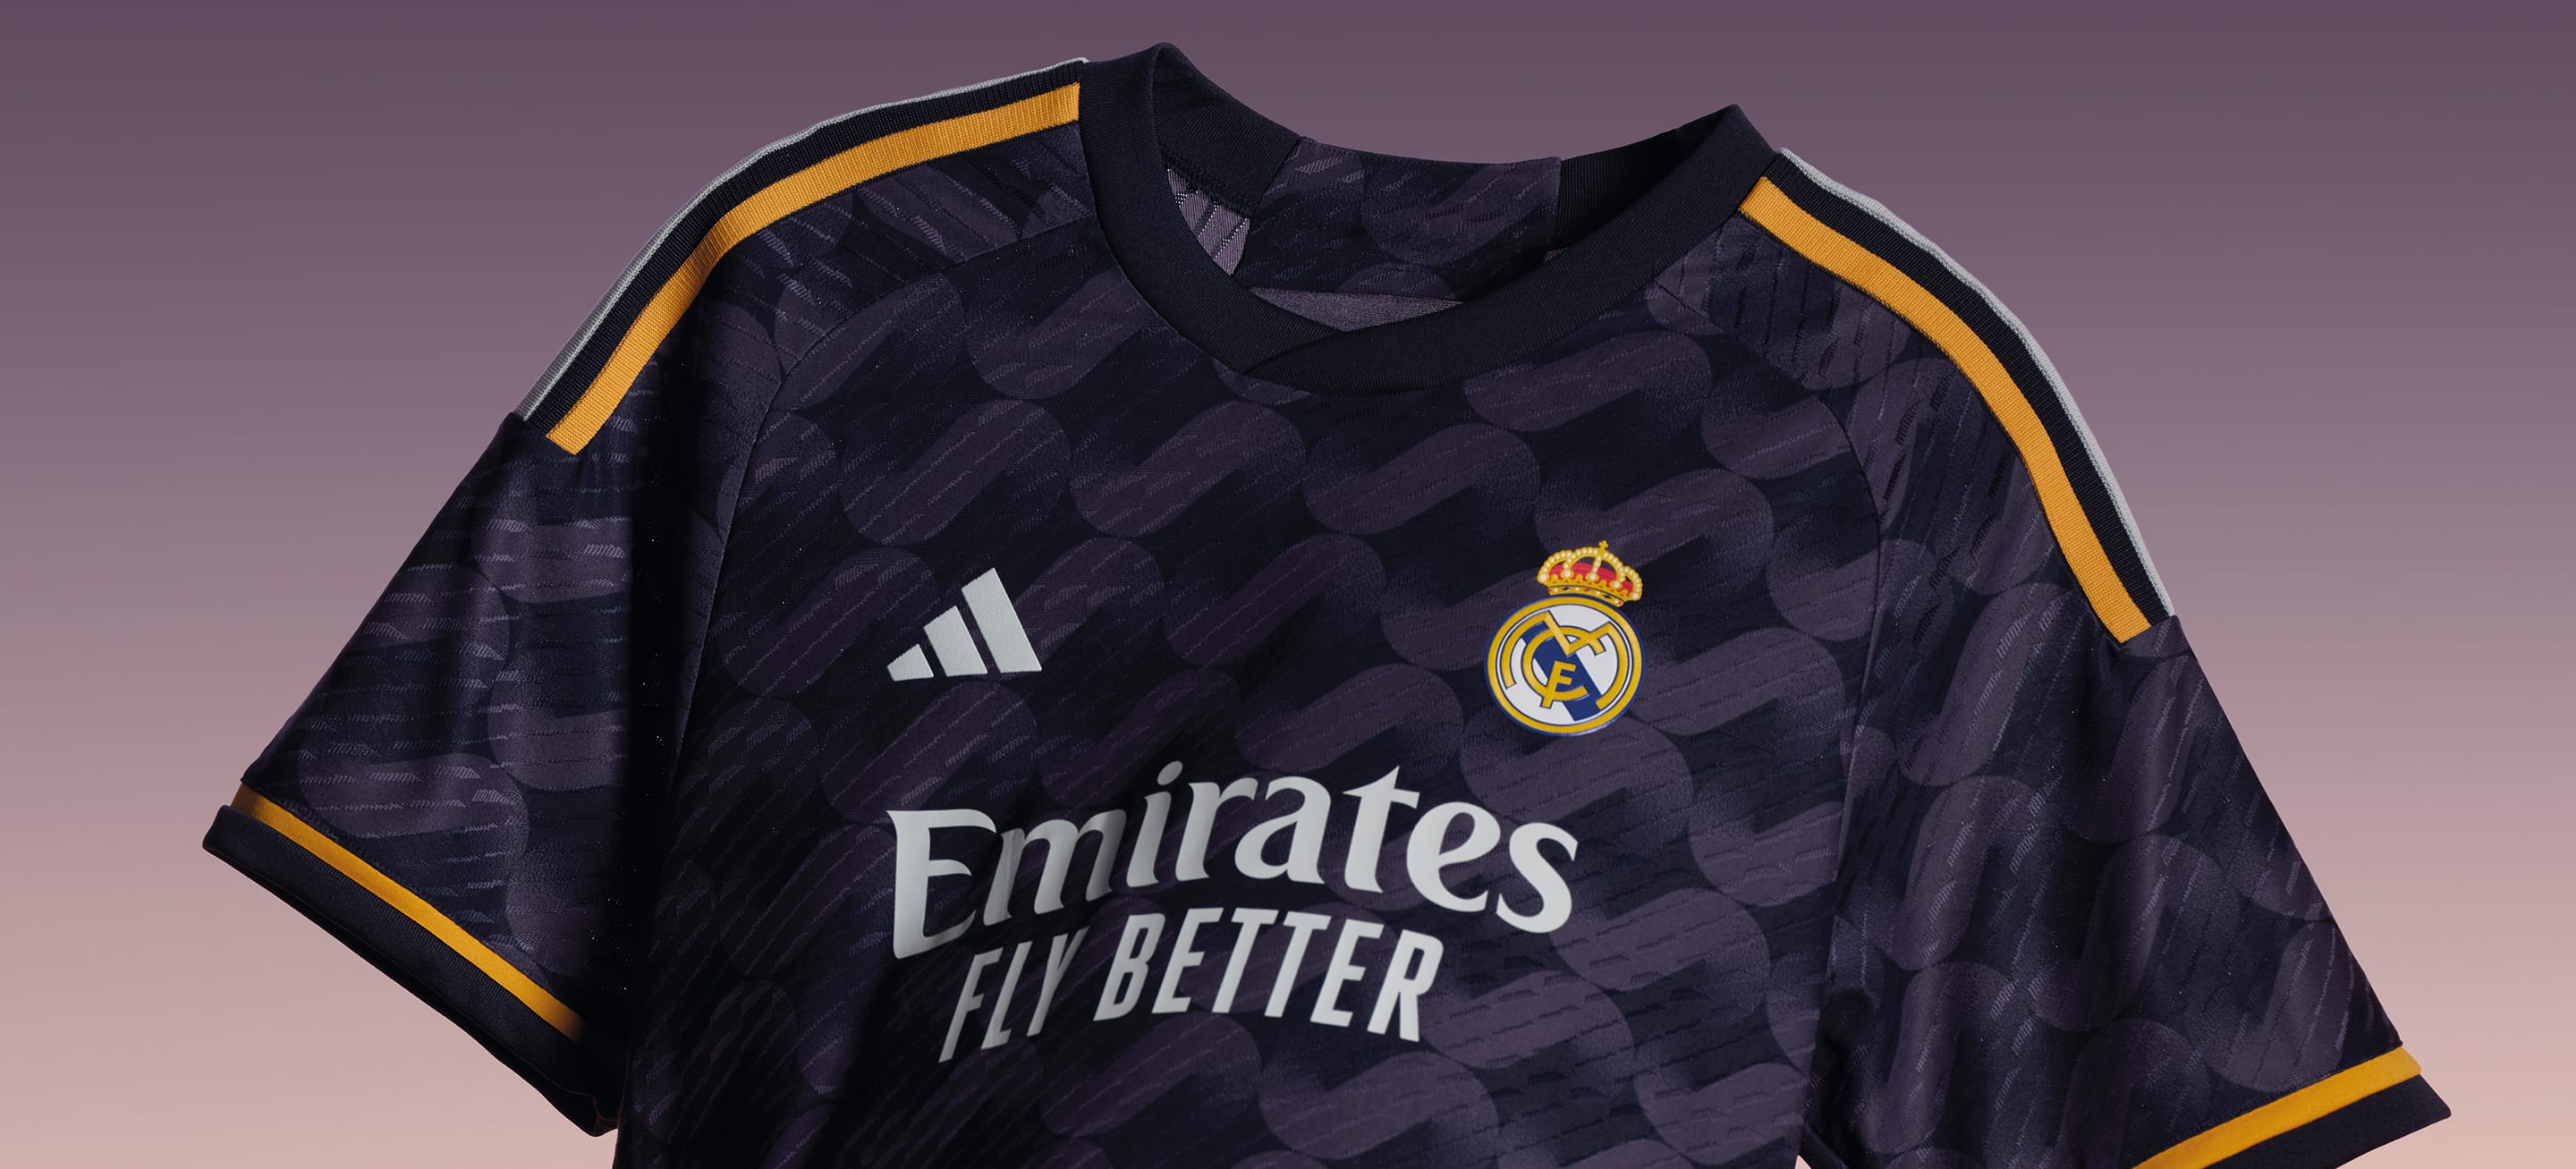 Maillot Junior Real Madrid 19/20 par adidas A1025790 – pas cher maillots de  foot promo